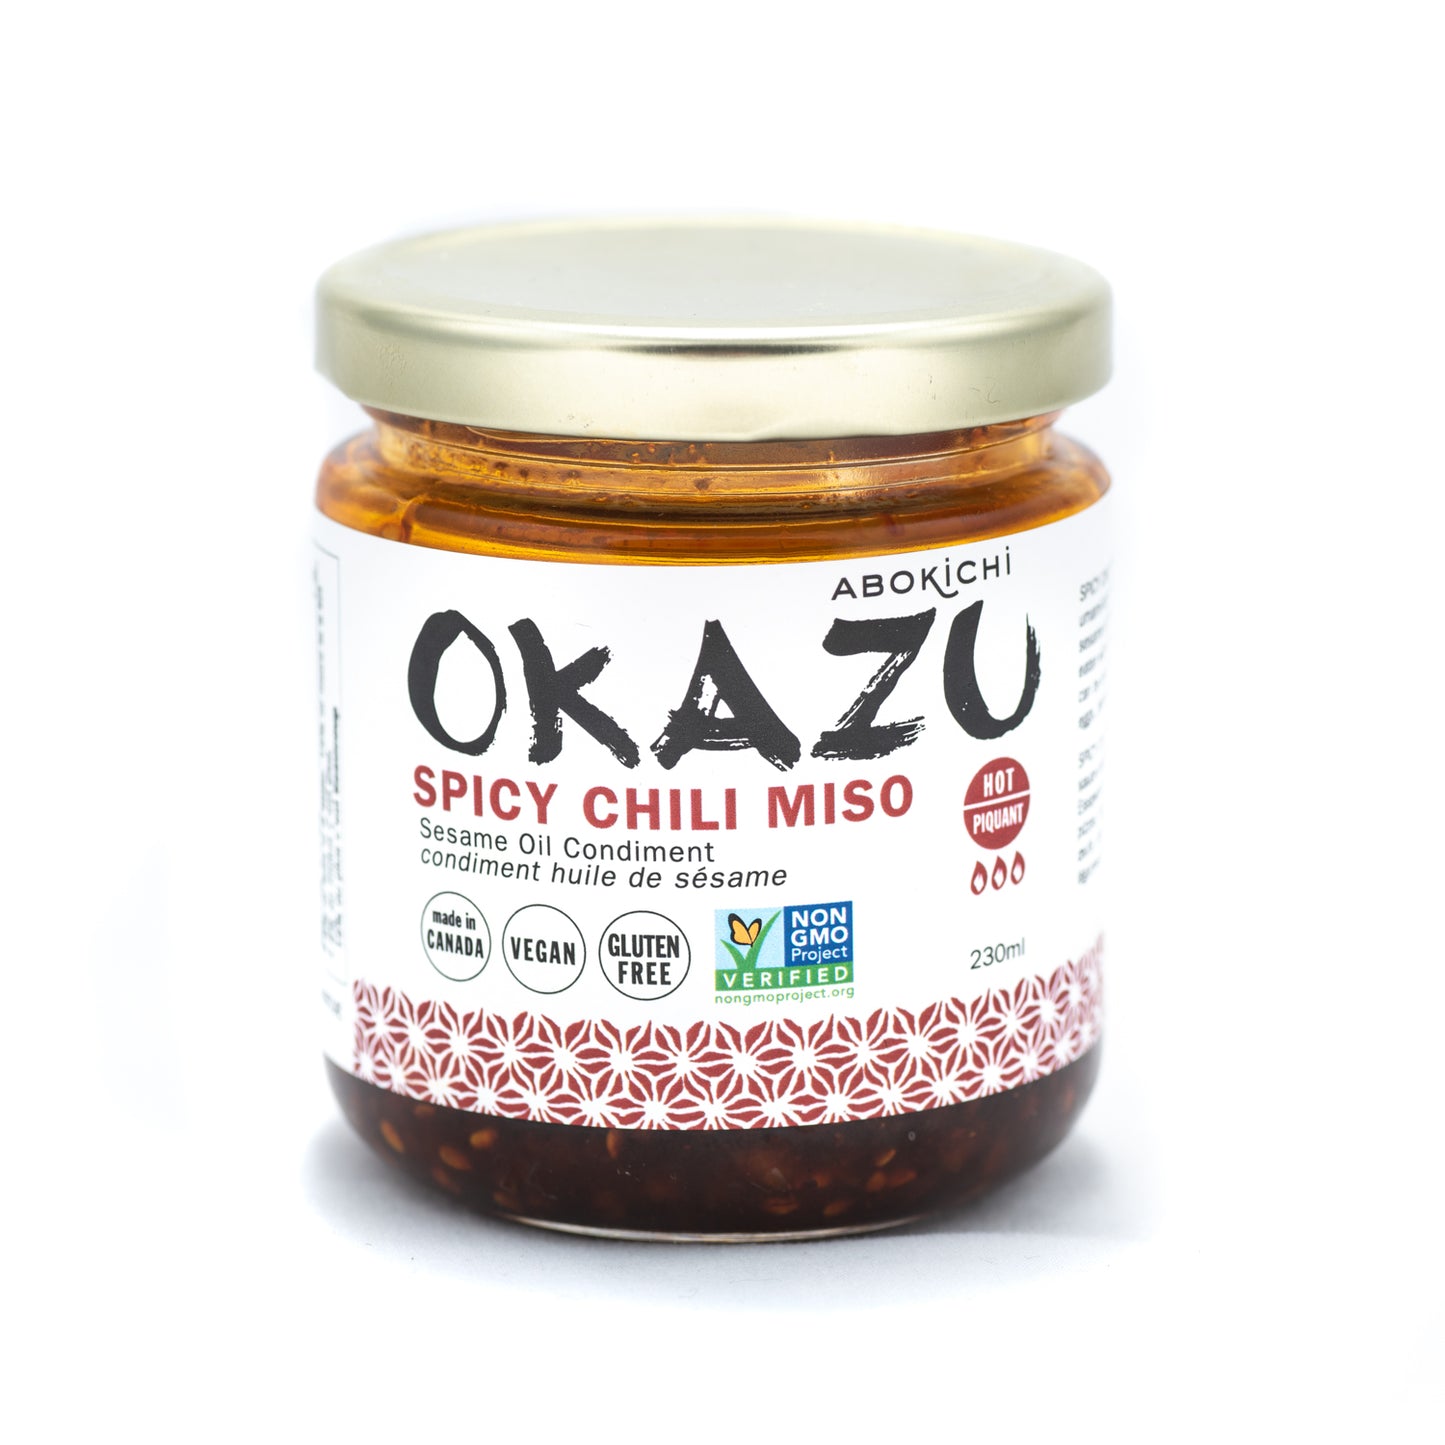 Okazu - Spicy Chili Miso